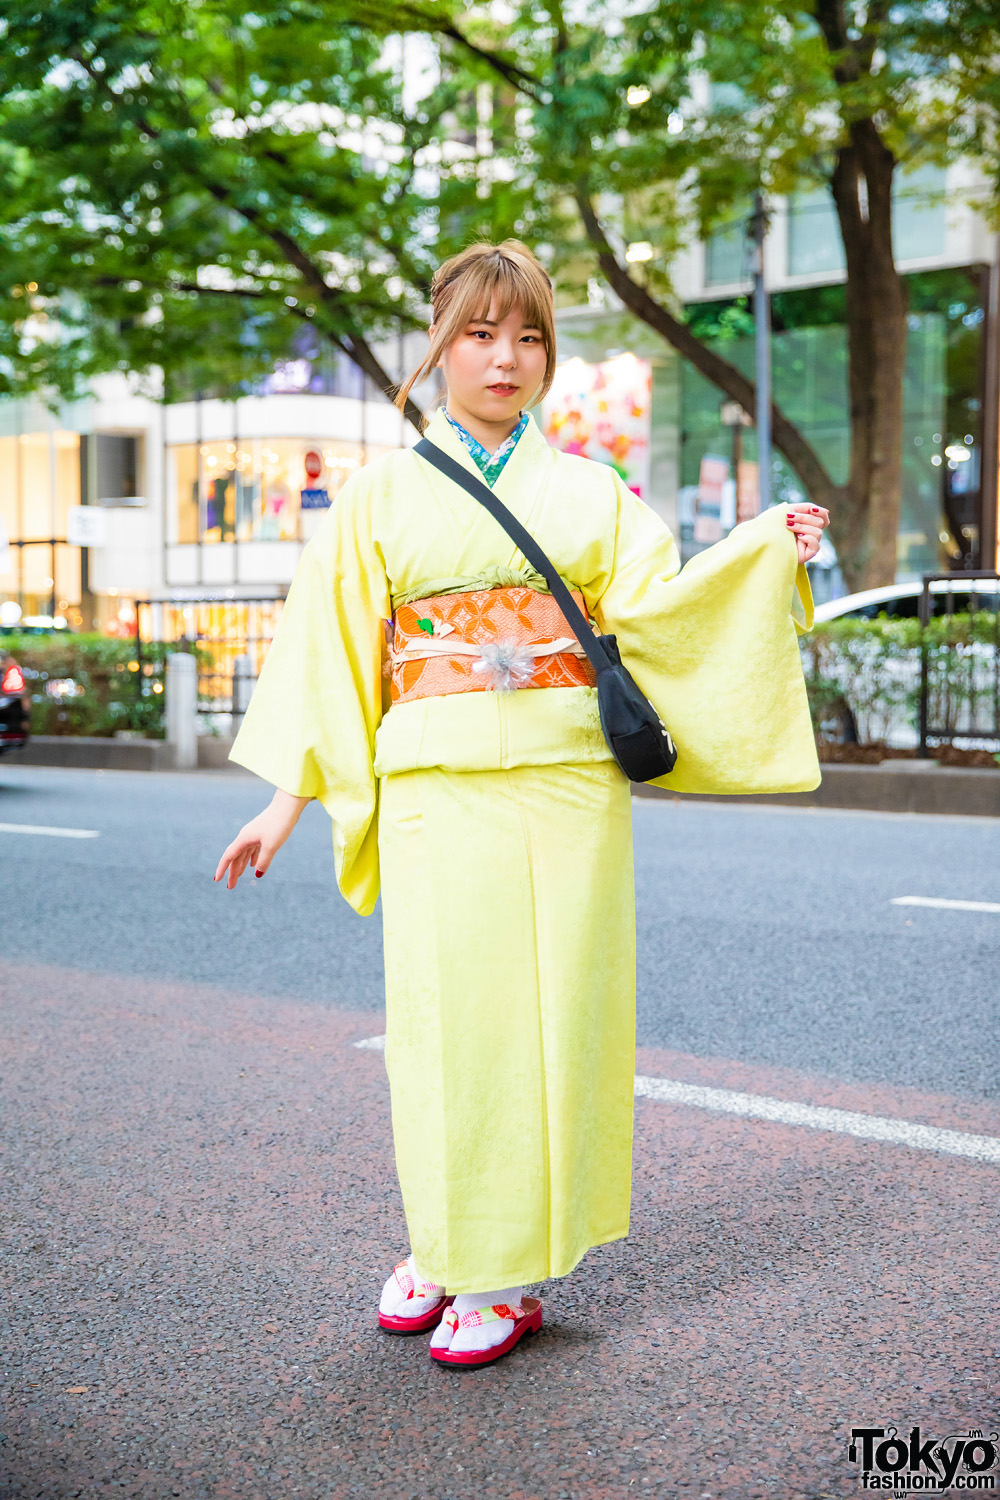 Japanese Kimono Street Style w/ Braided Updo, Resale Komon Kimono, Cat Bag, Tabi Socks & Geta Sandals